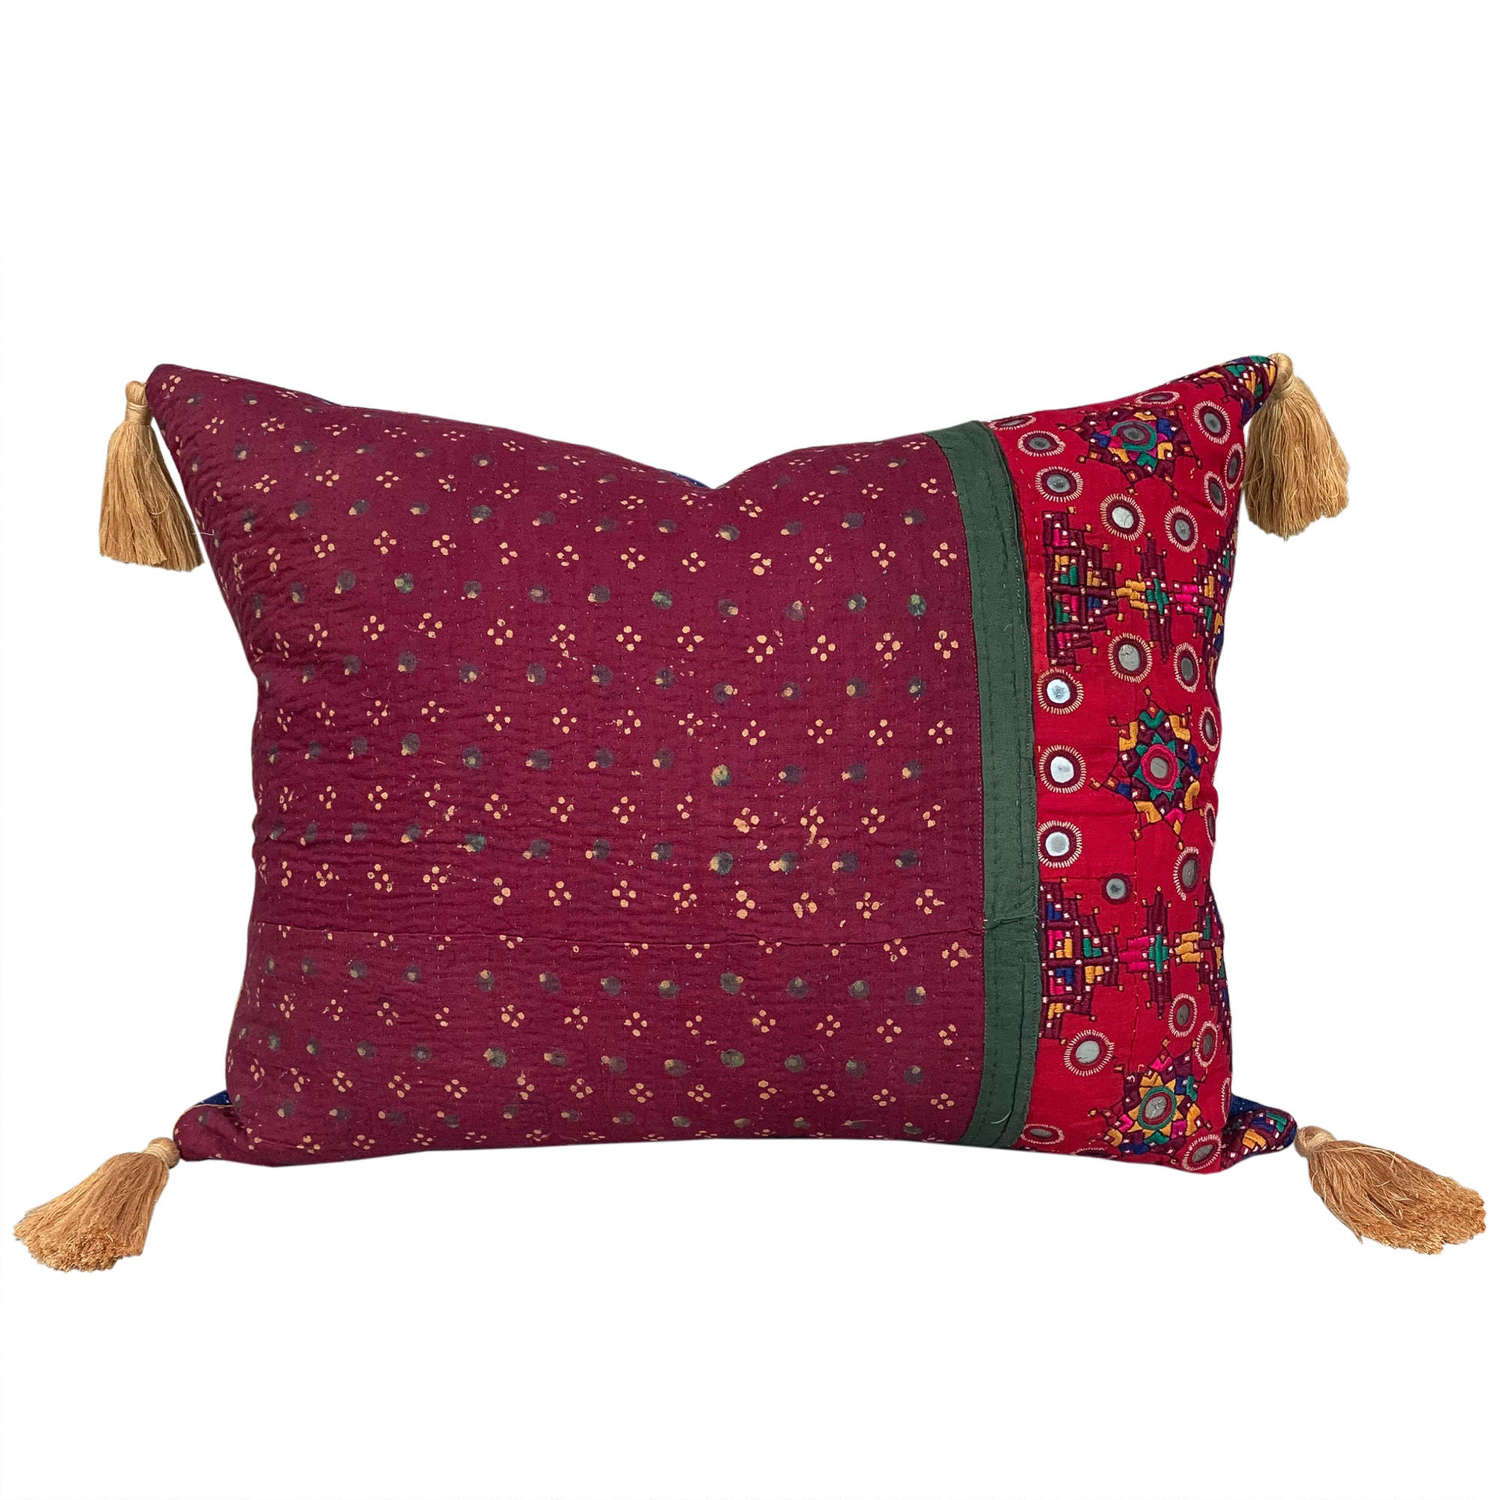 Dowry bag cushion with tassels